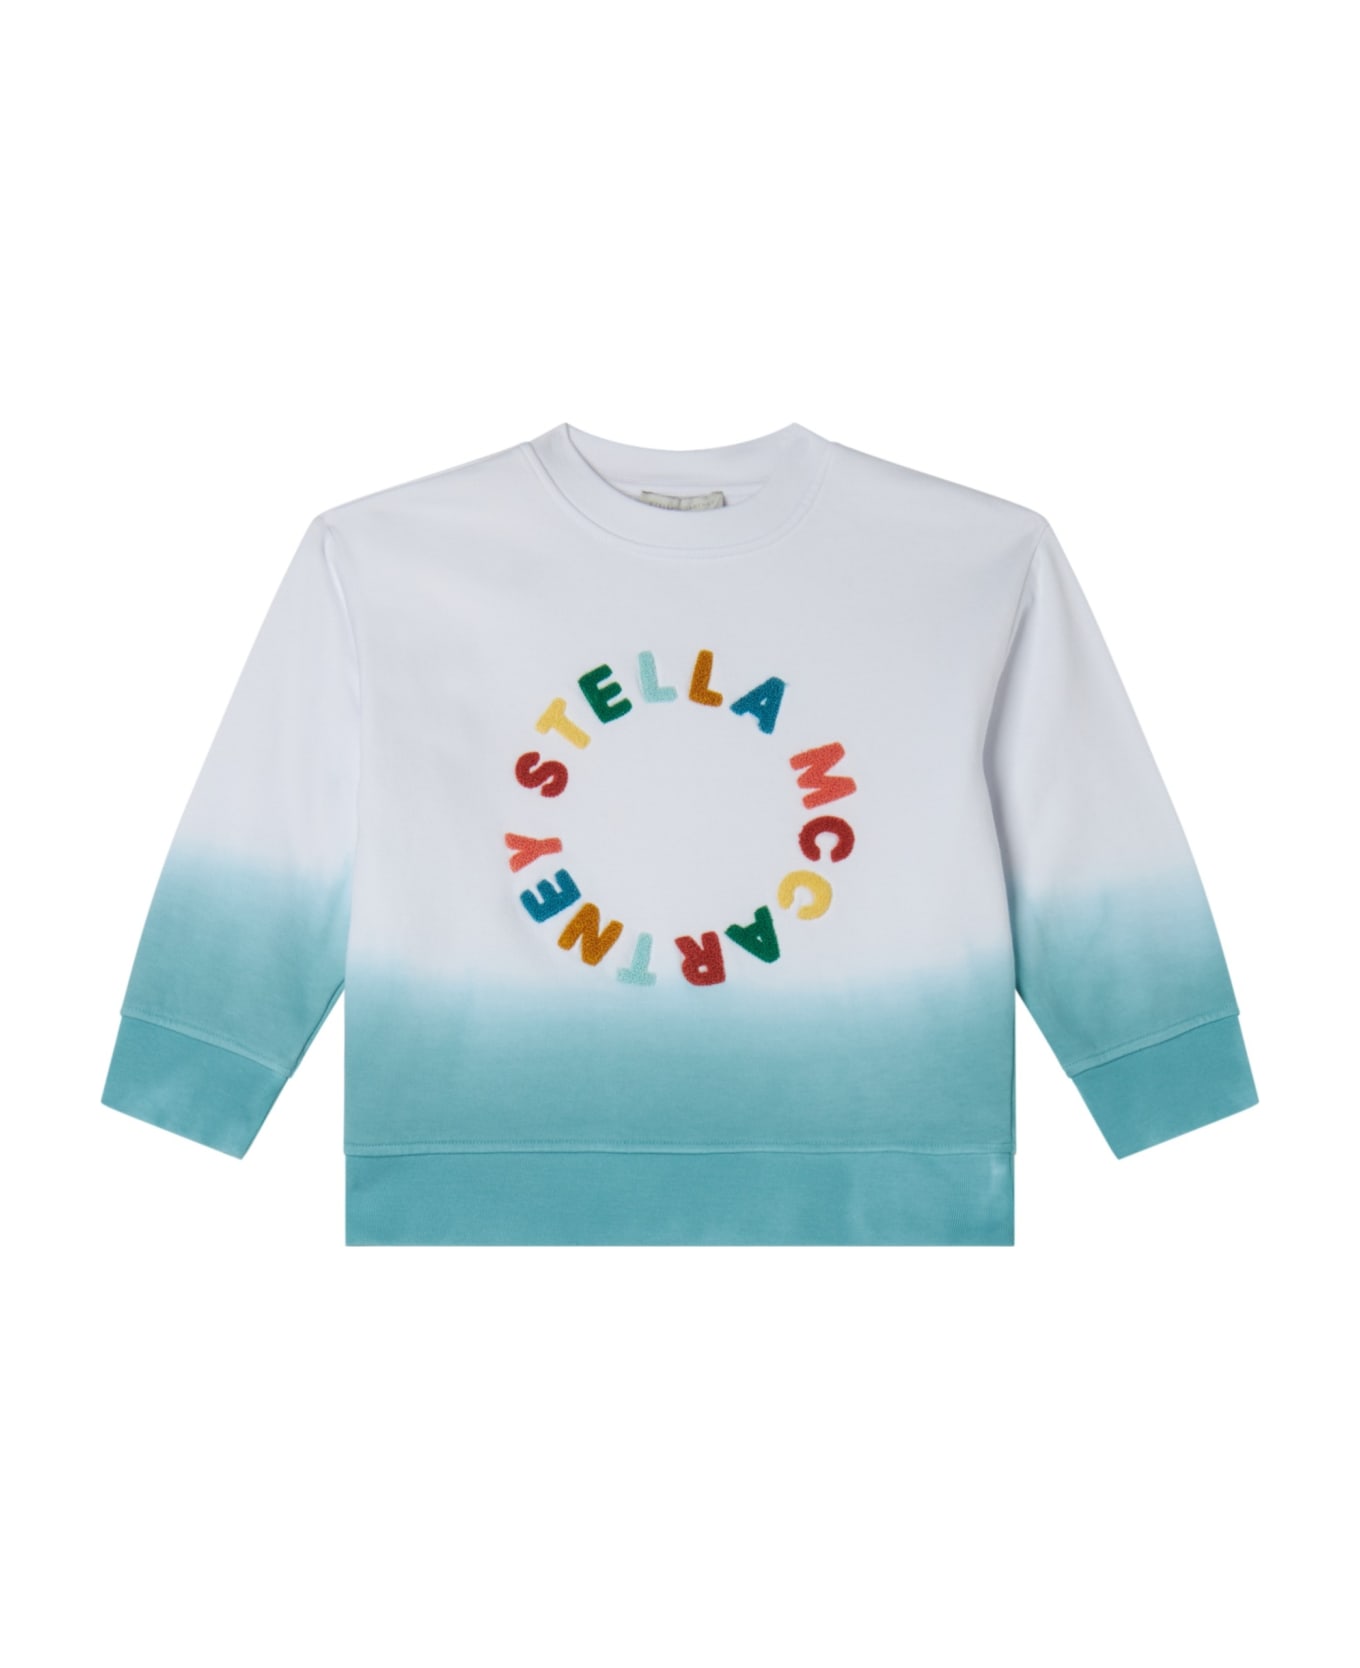 Stella McCartney Kids Sweatshirt With Application - WHITE/BLUE